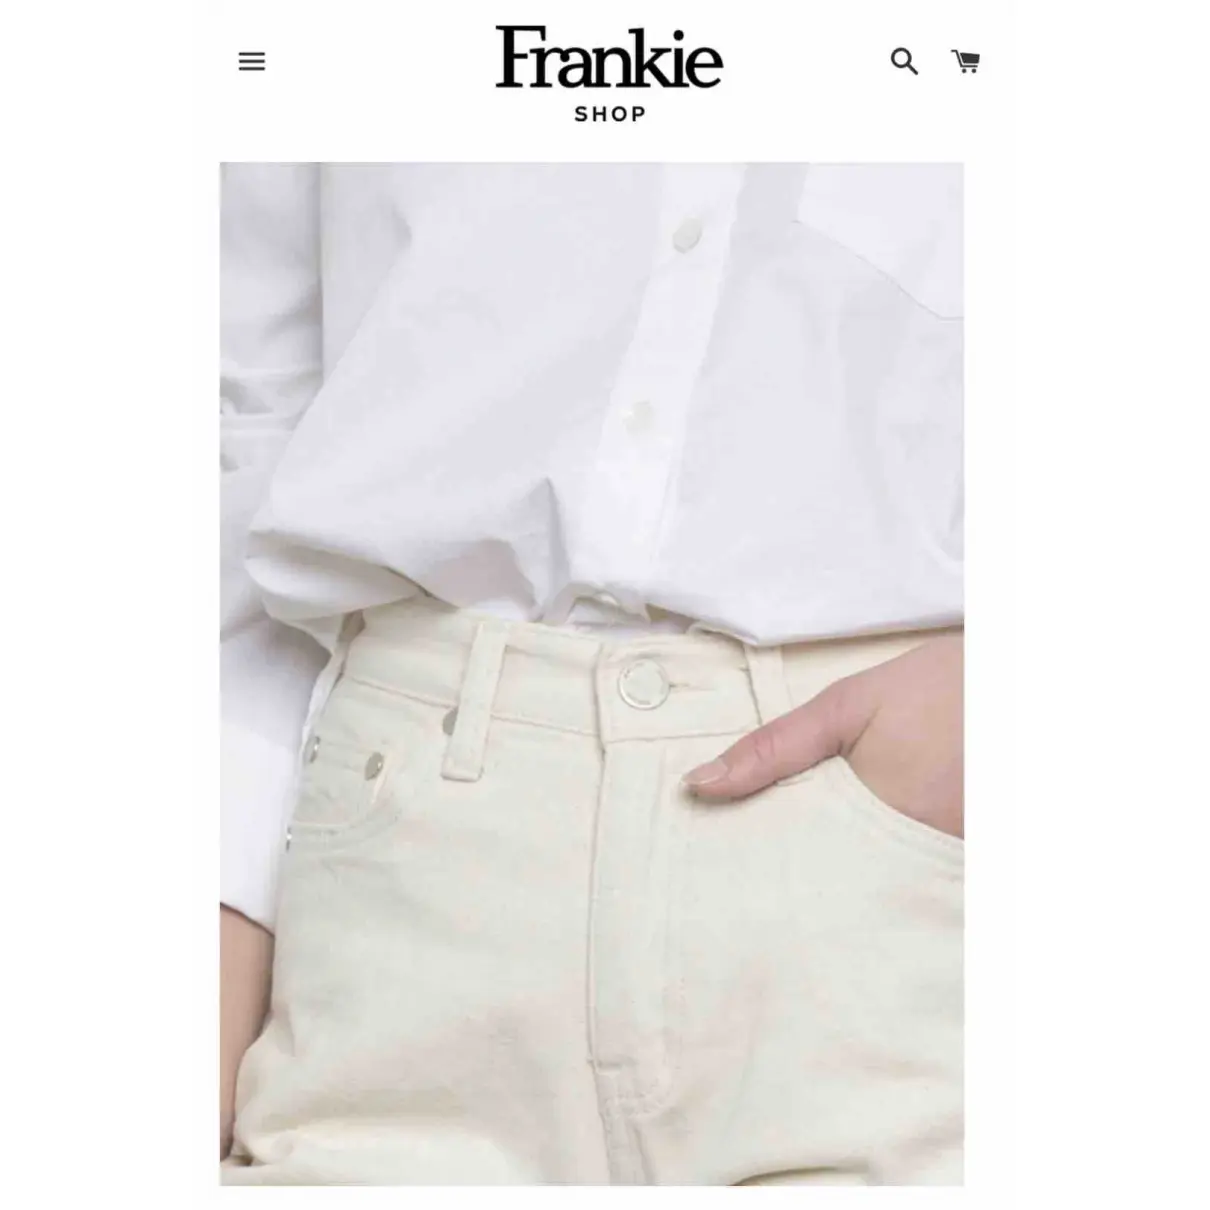 Short jeans The Frankie Shop